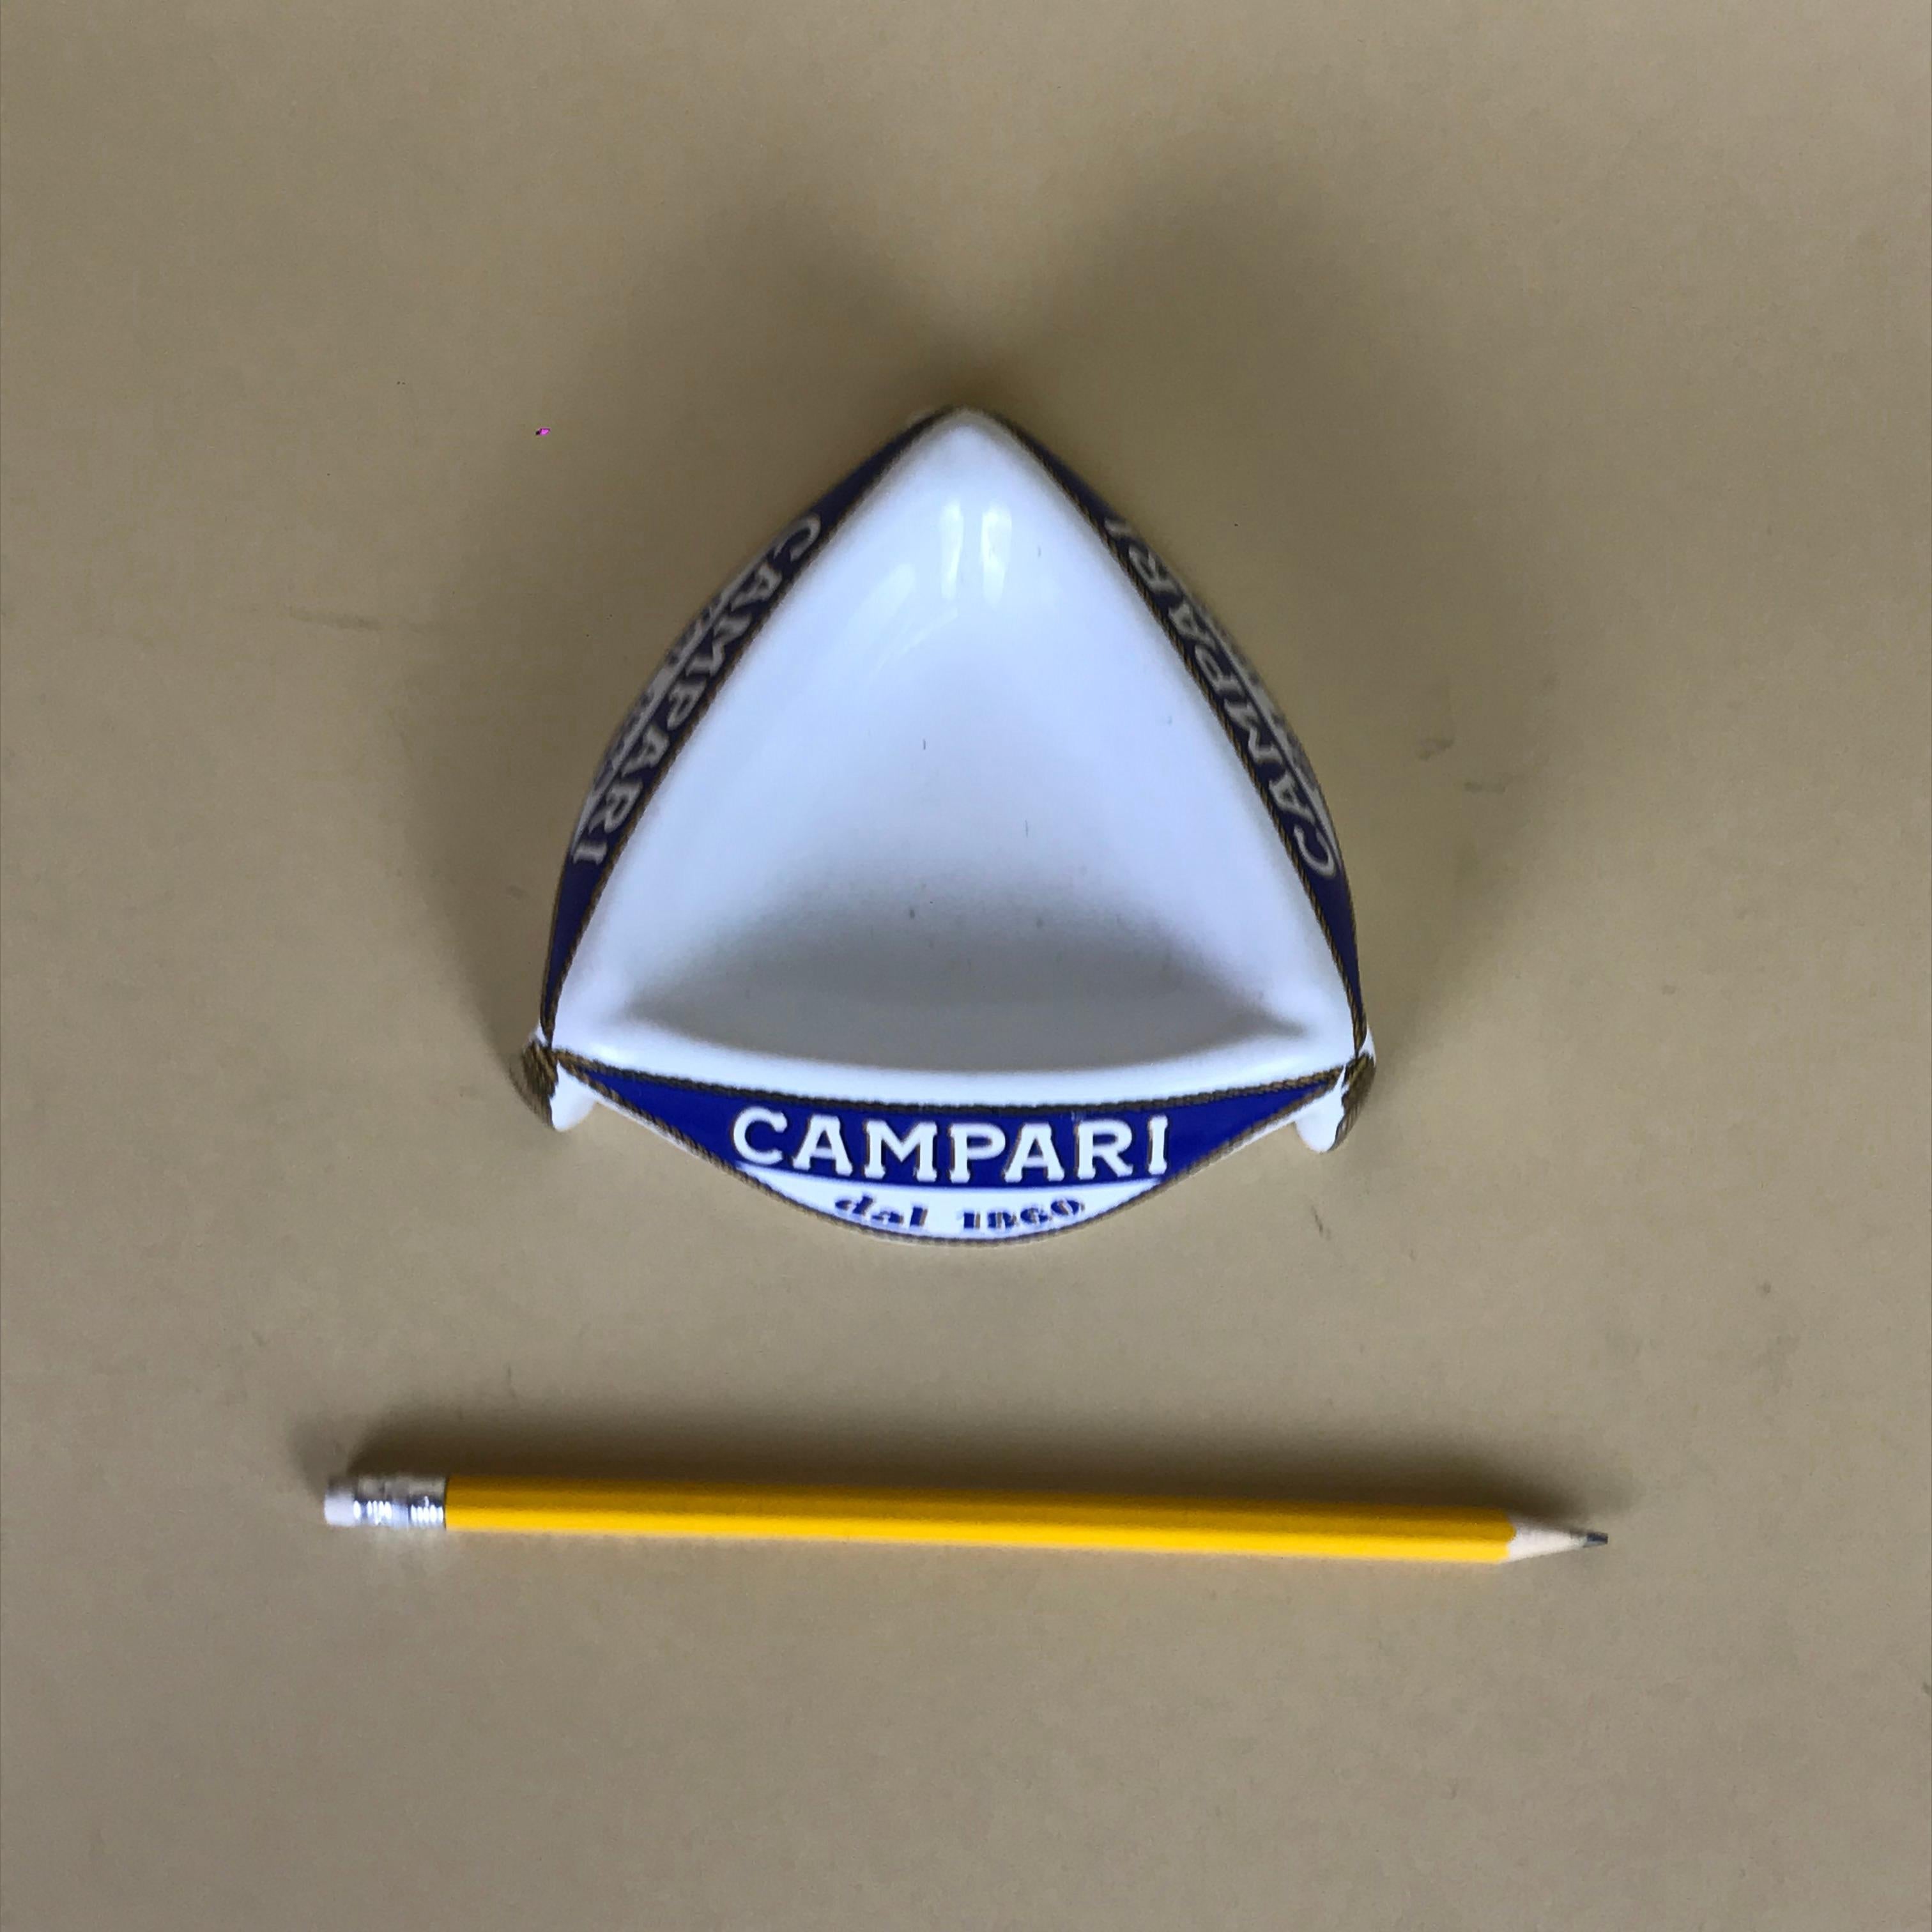 1960s Vintage Advertising Campari Triangular Ashtray Ceramic with Tassels Motif 2